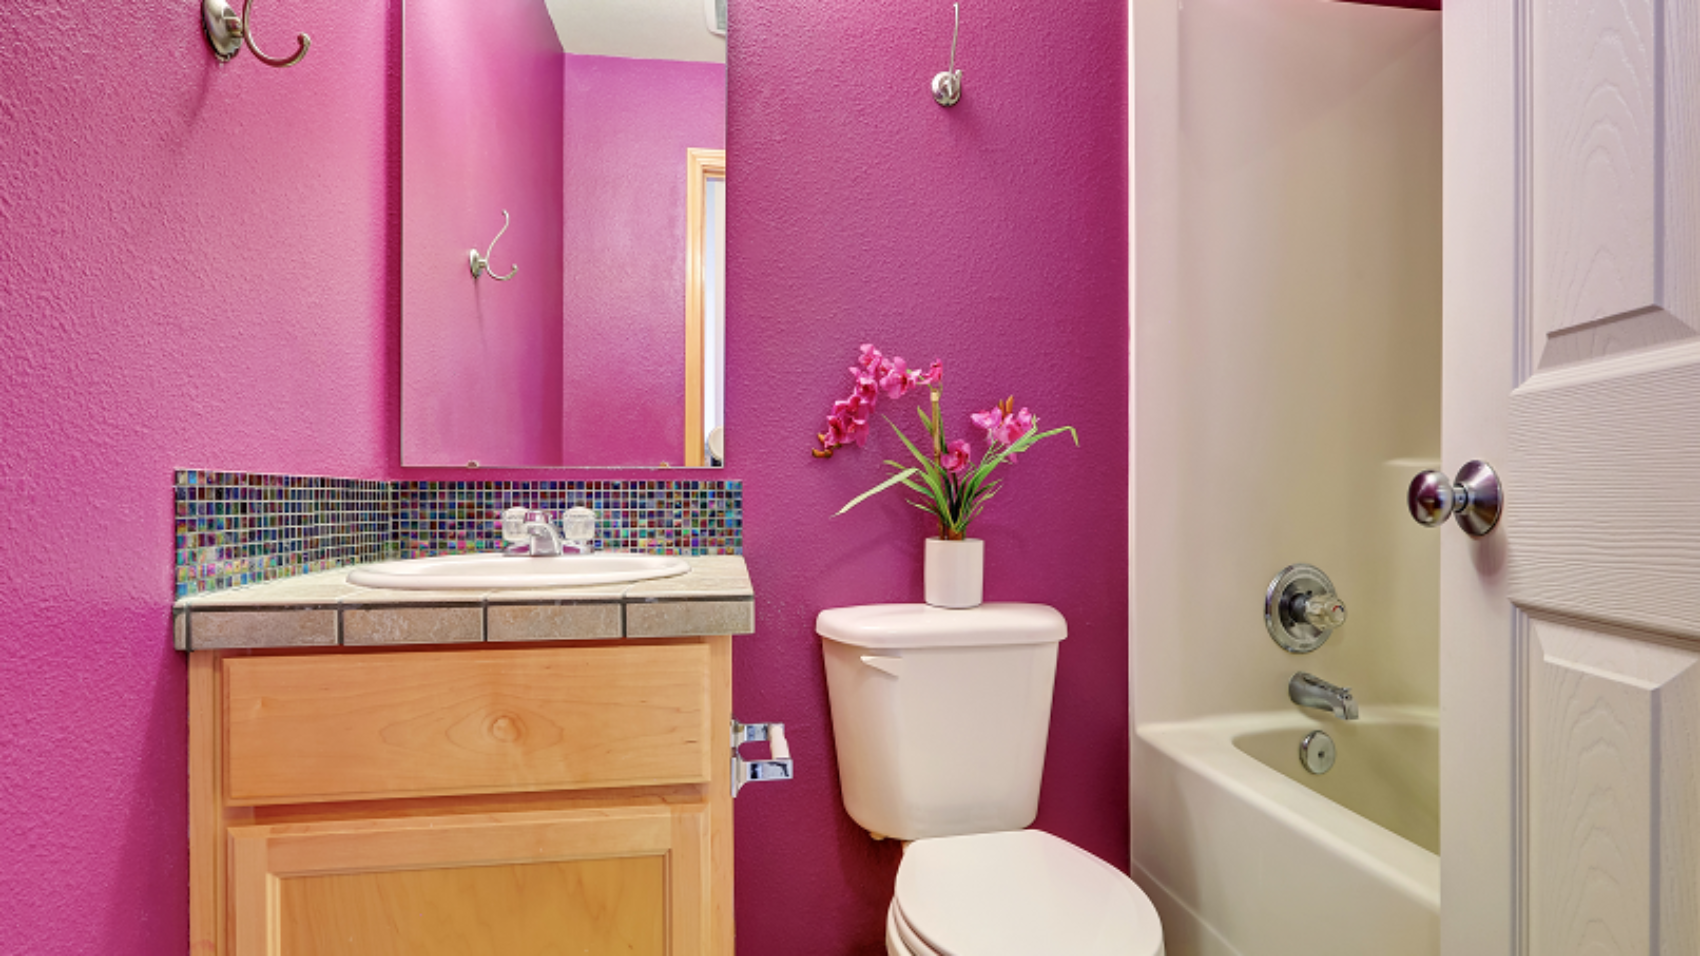 small bathroom renovation ideas